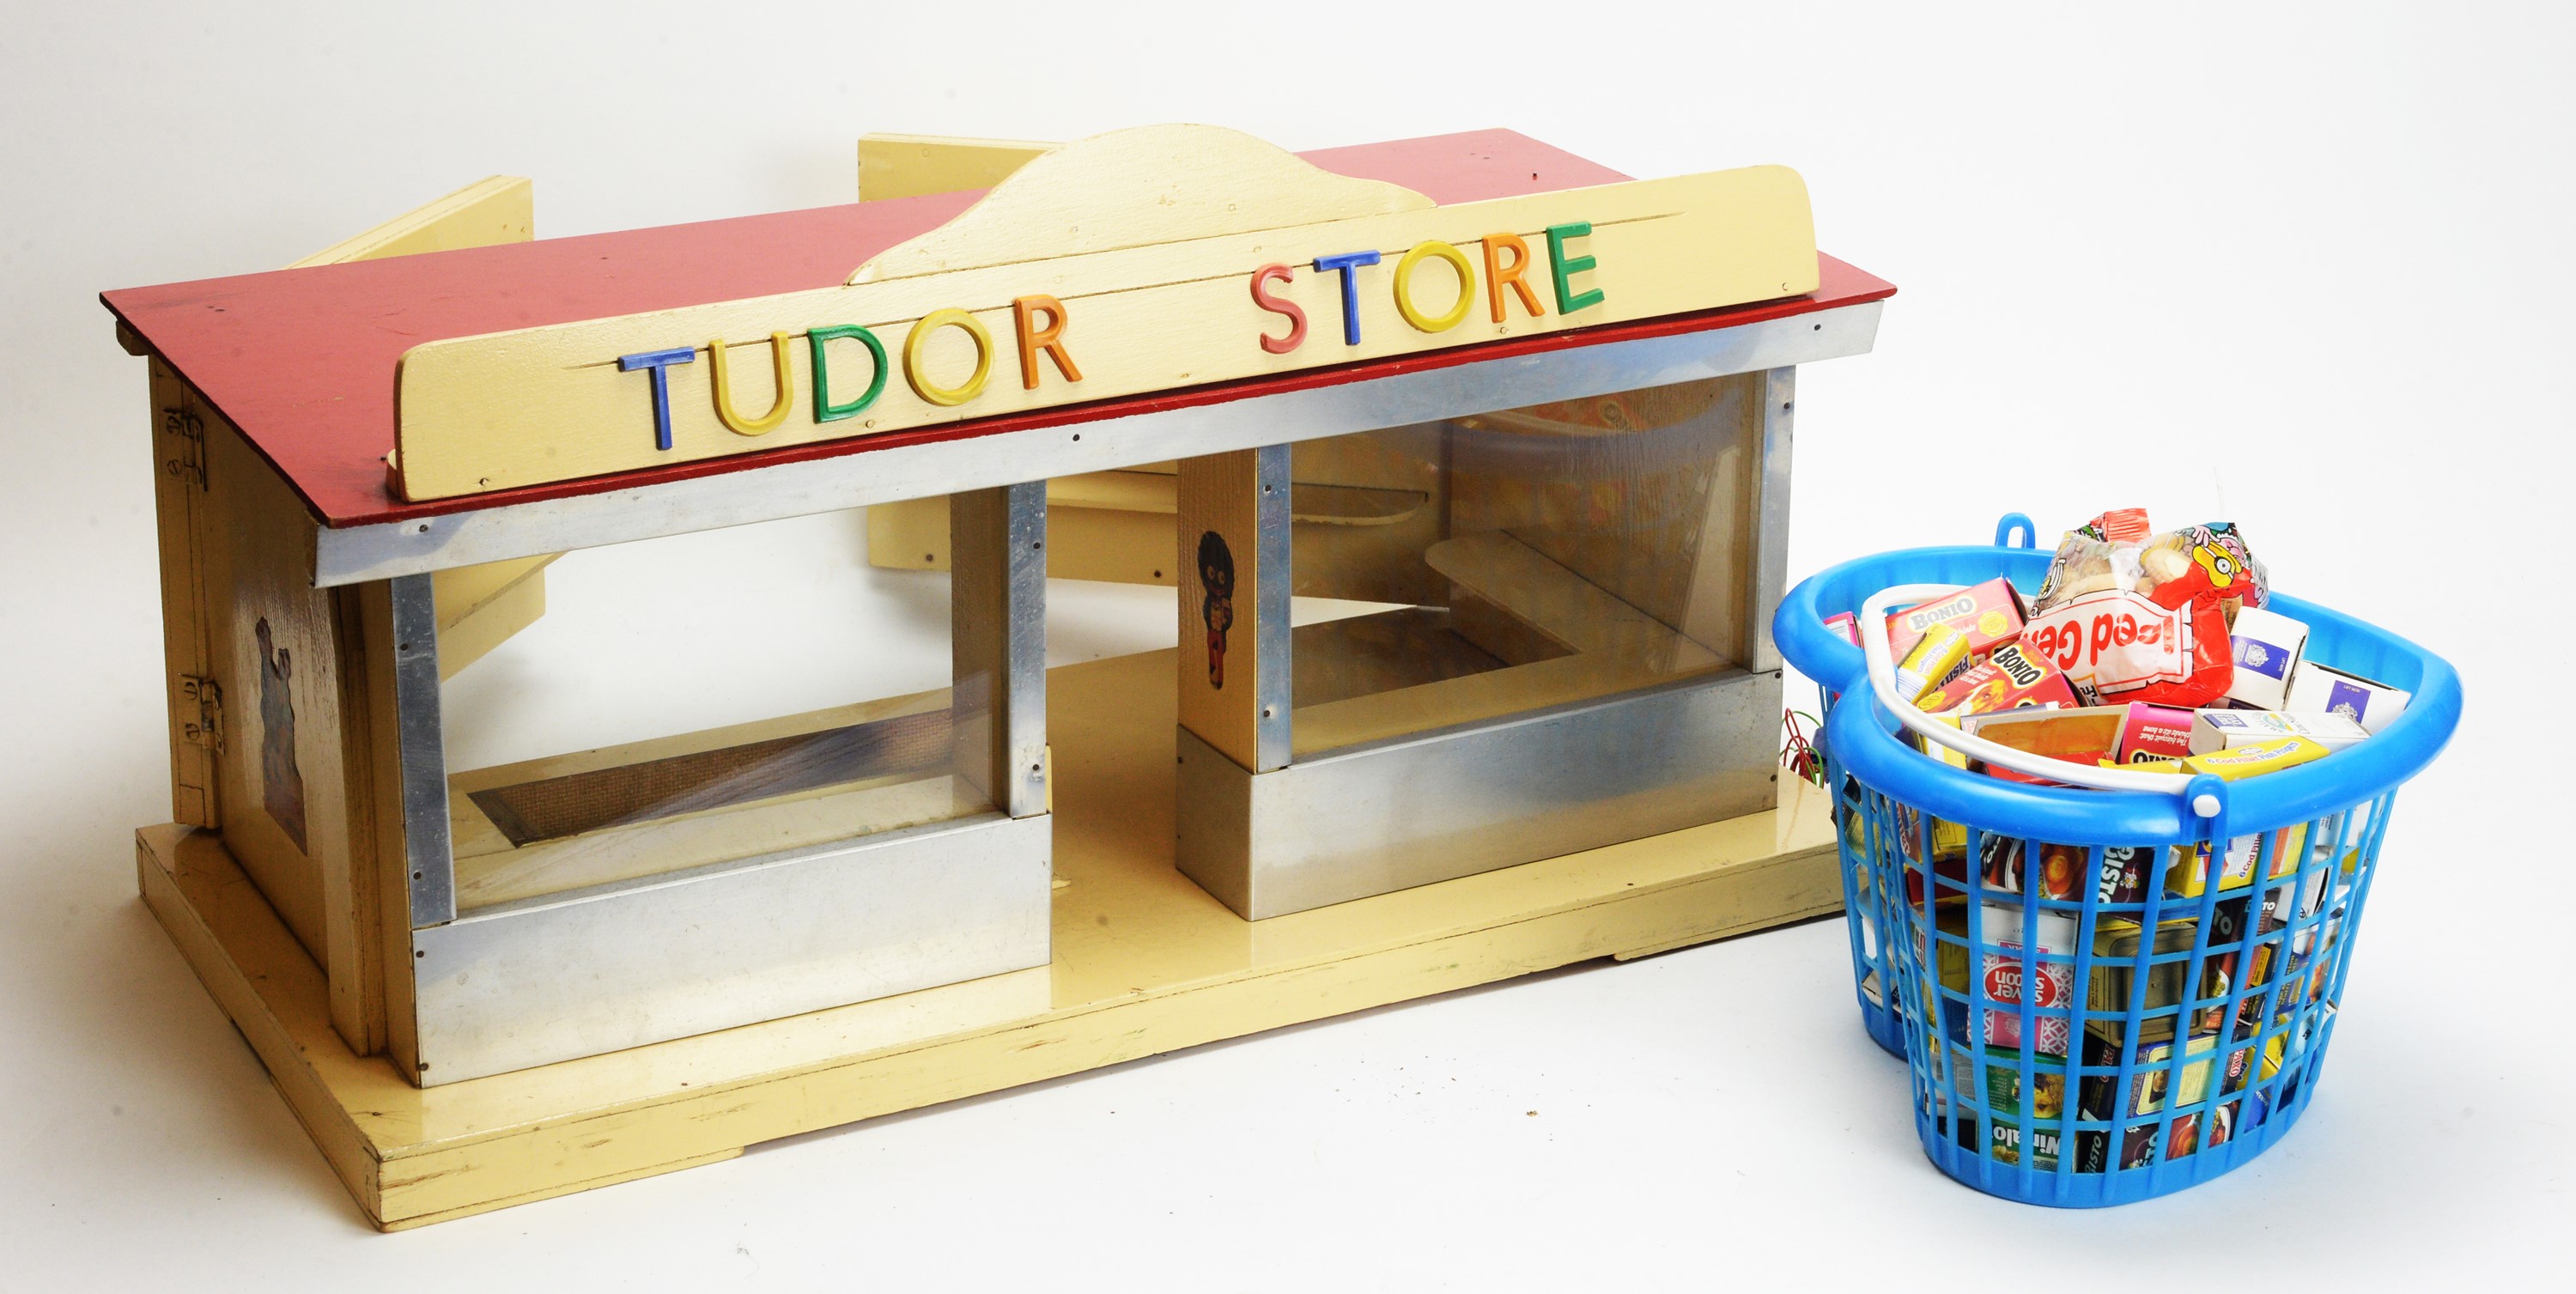 A doll's "Tudor Store"